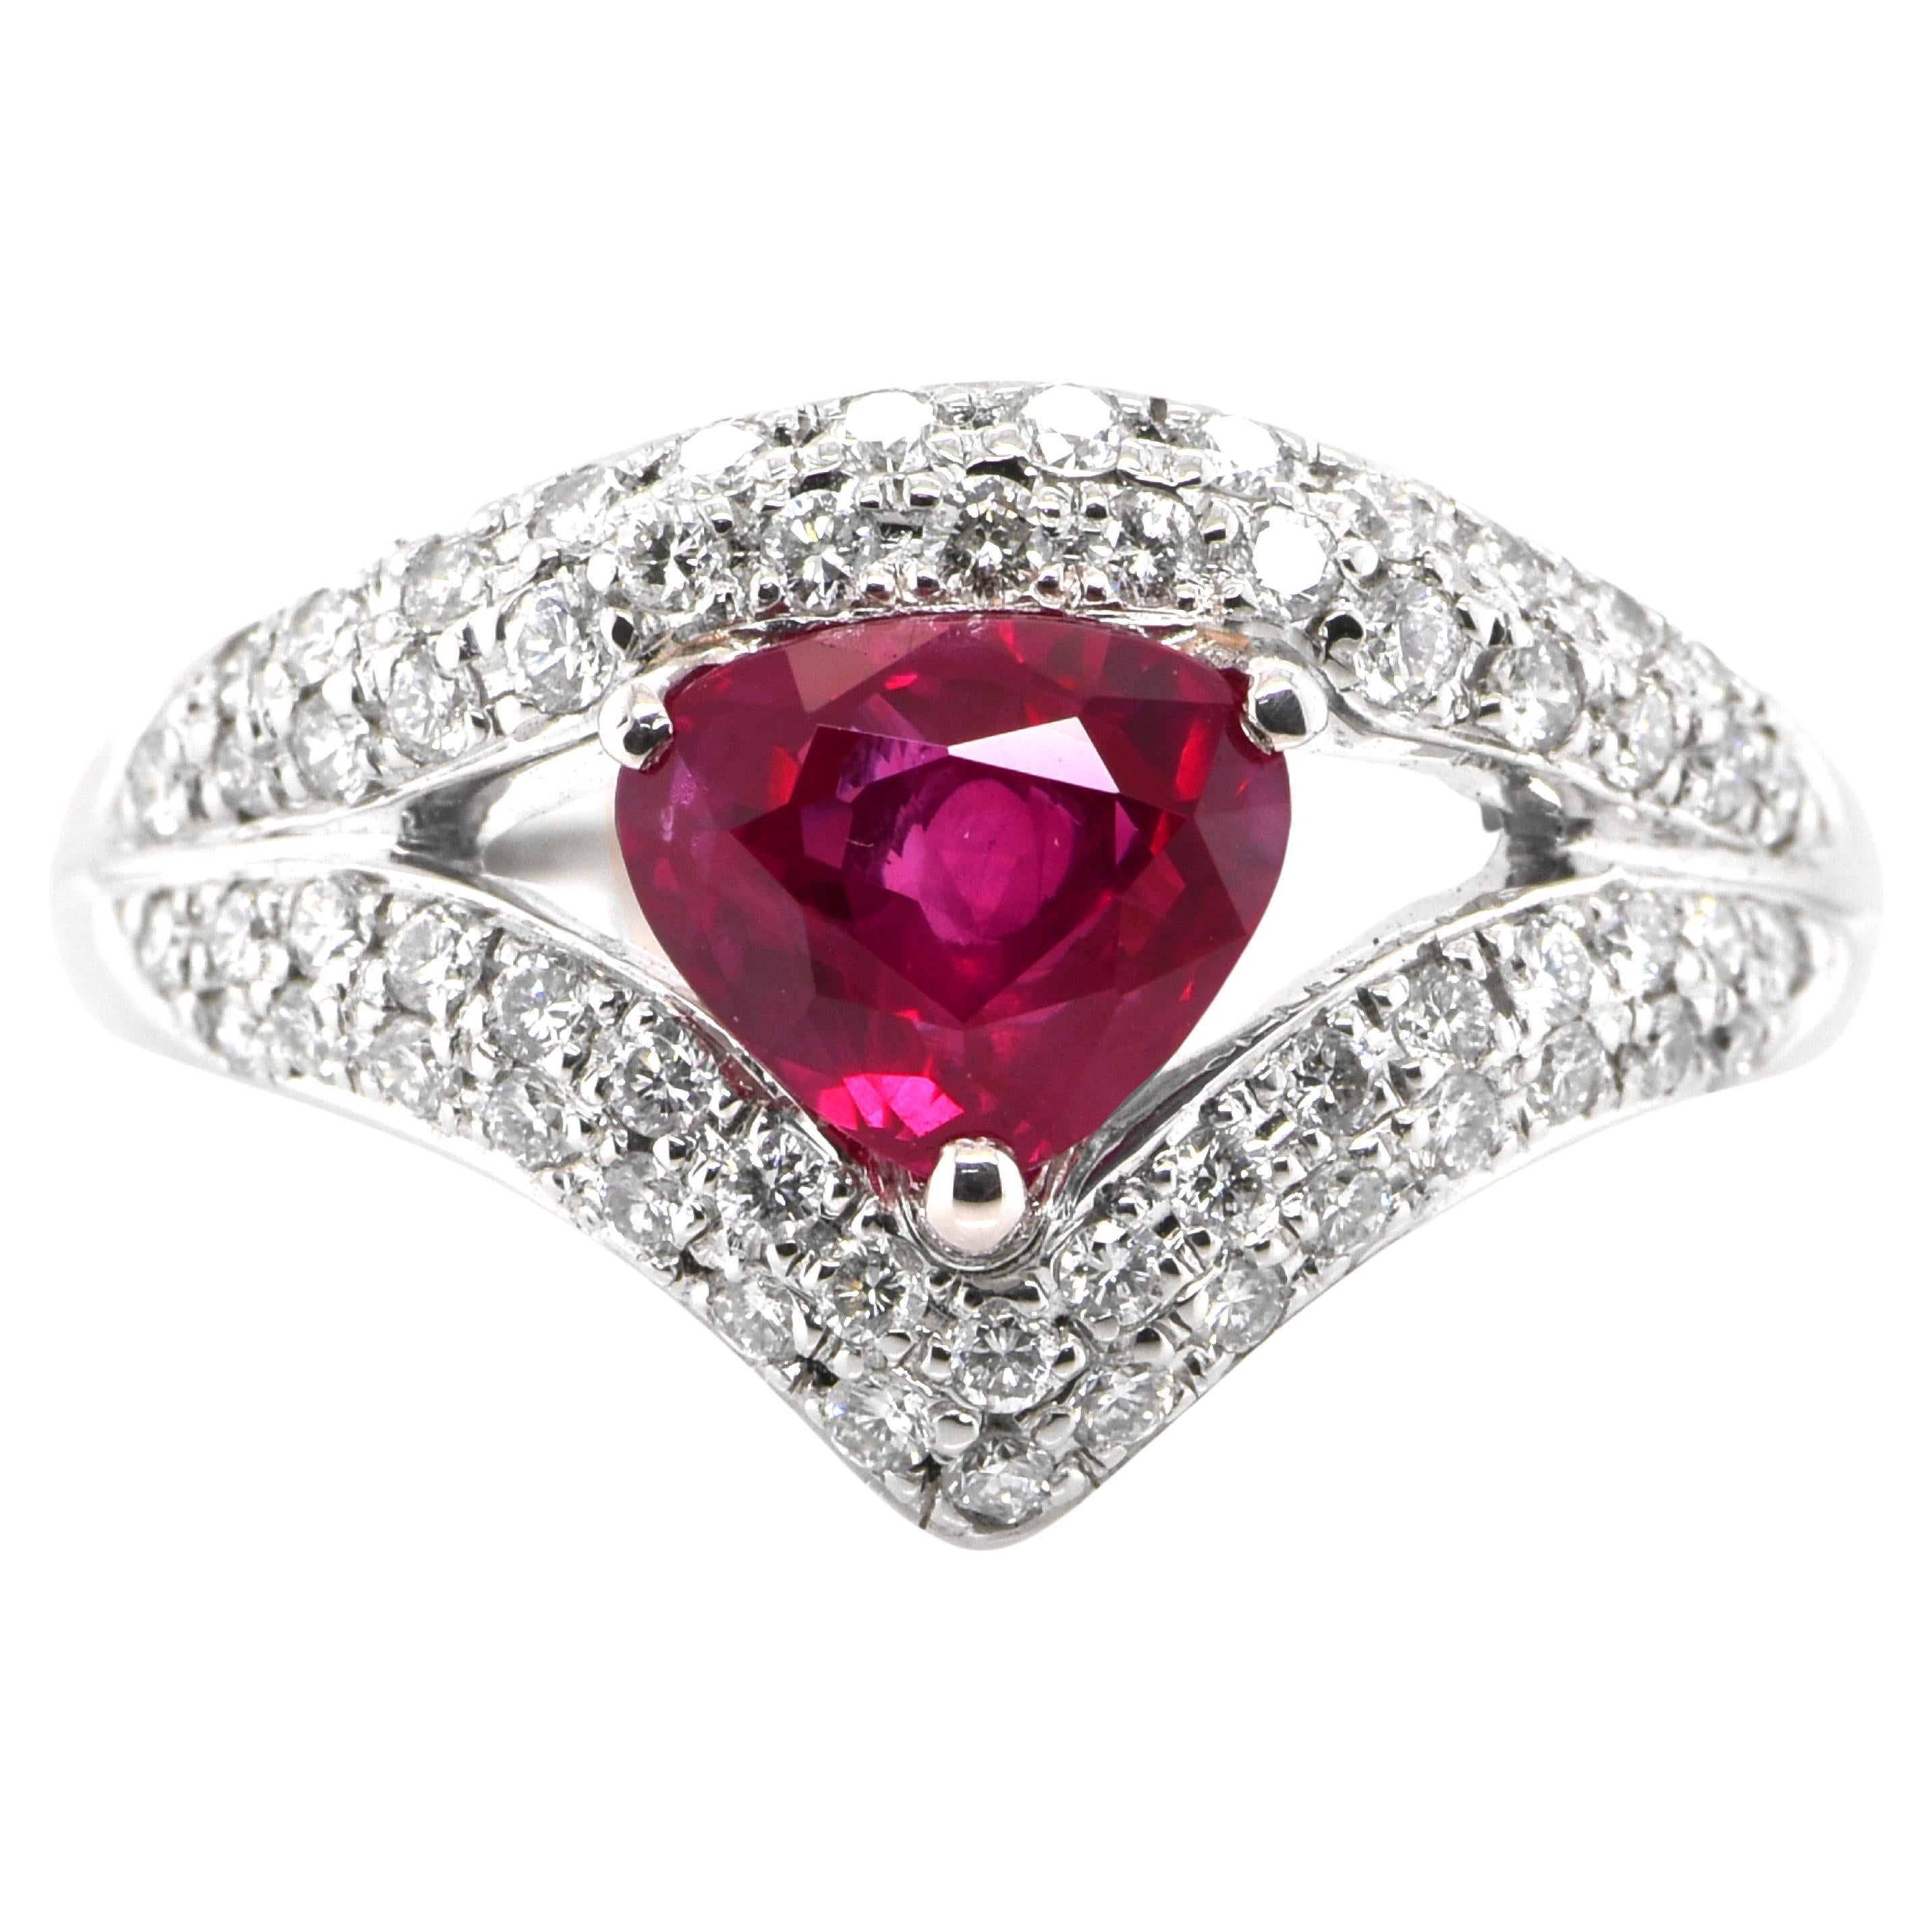 GIA Certified 1.49 Carat Natural Burmese Ruby and Diamond Ring set in Platinum